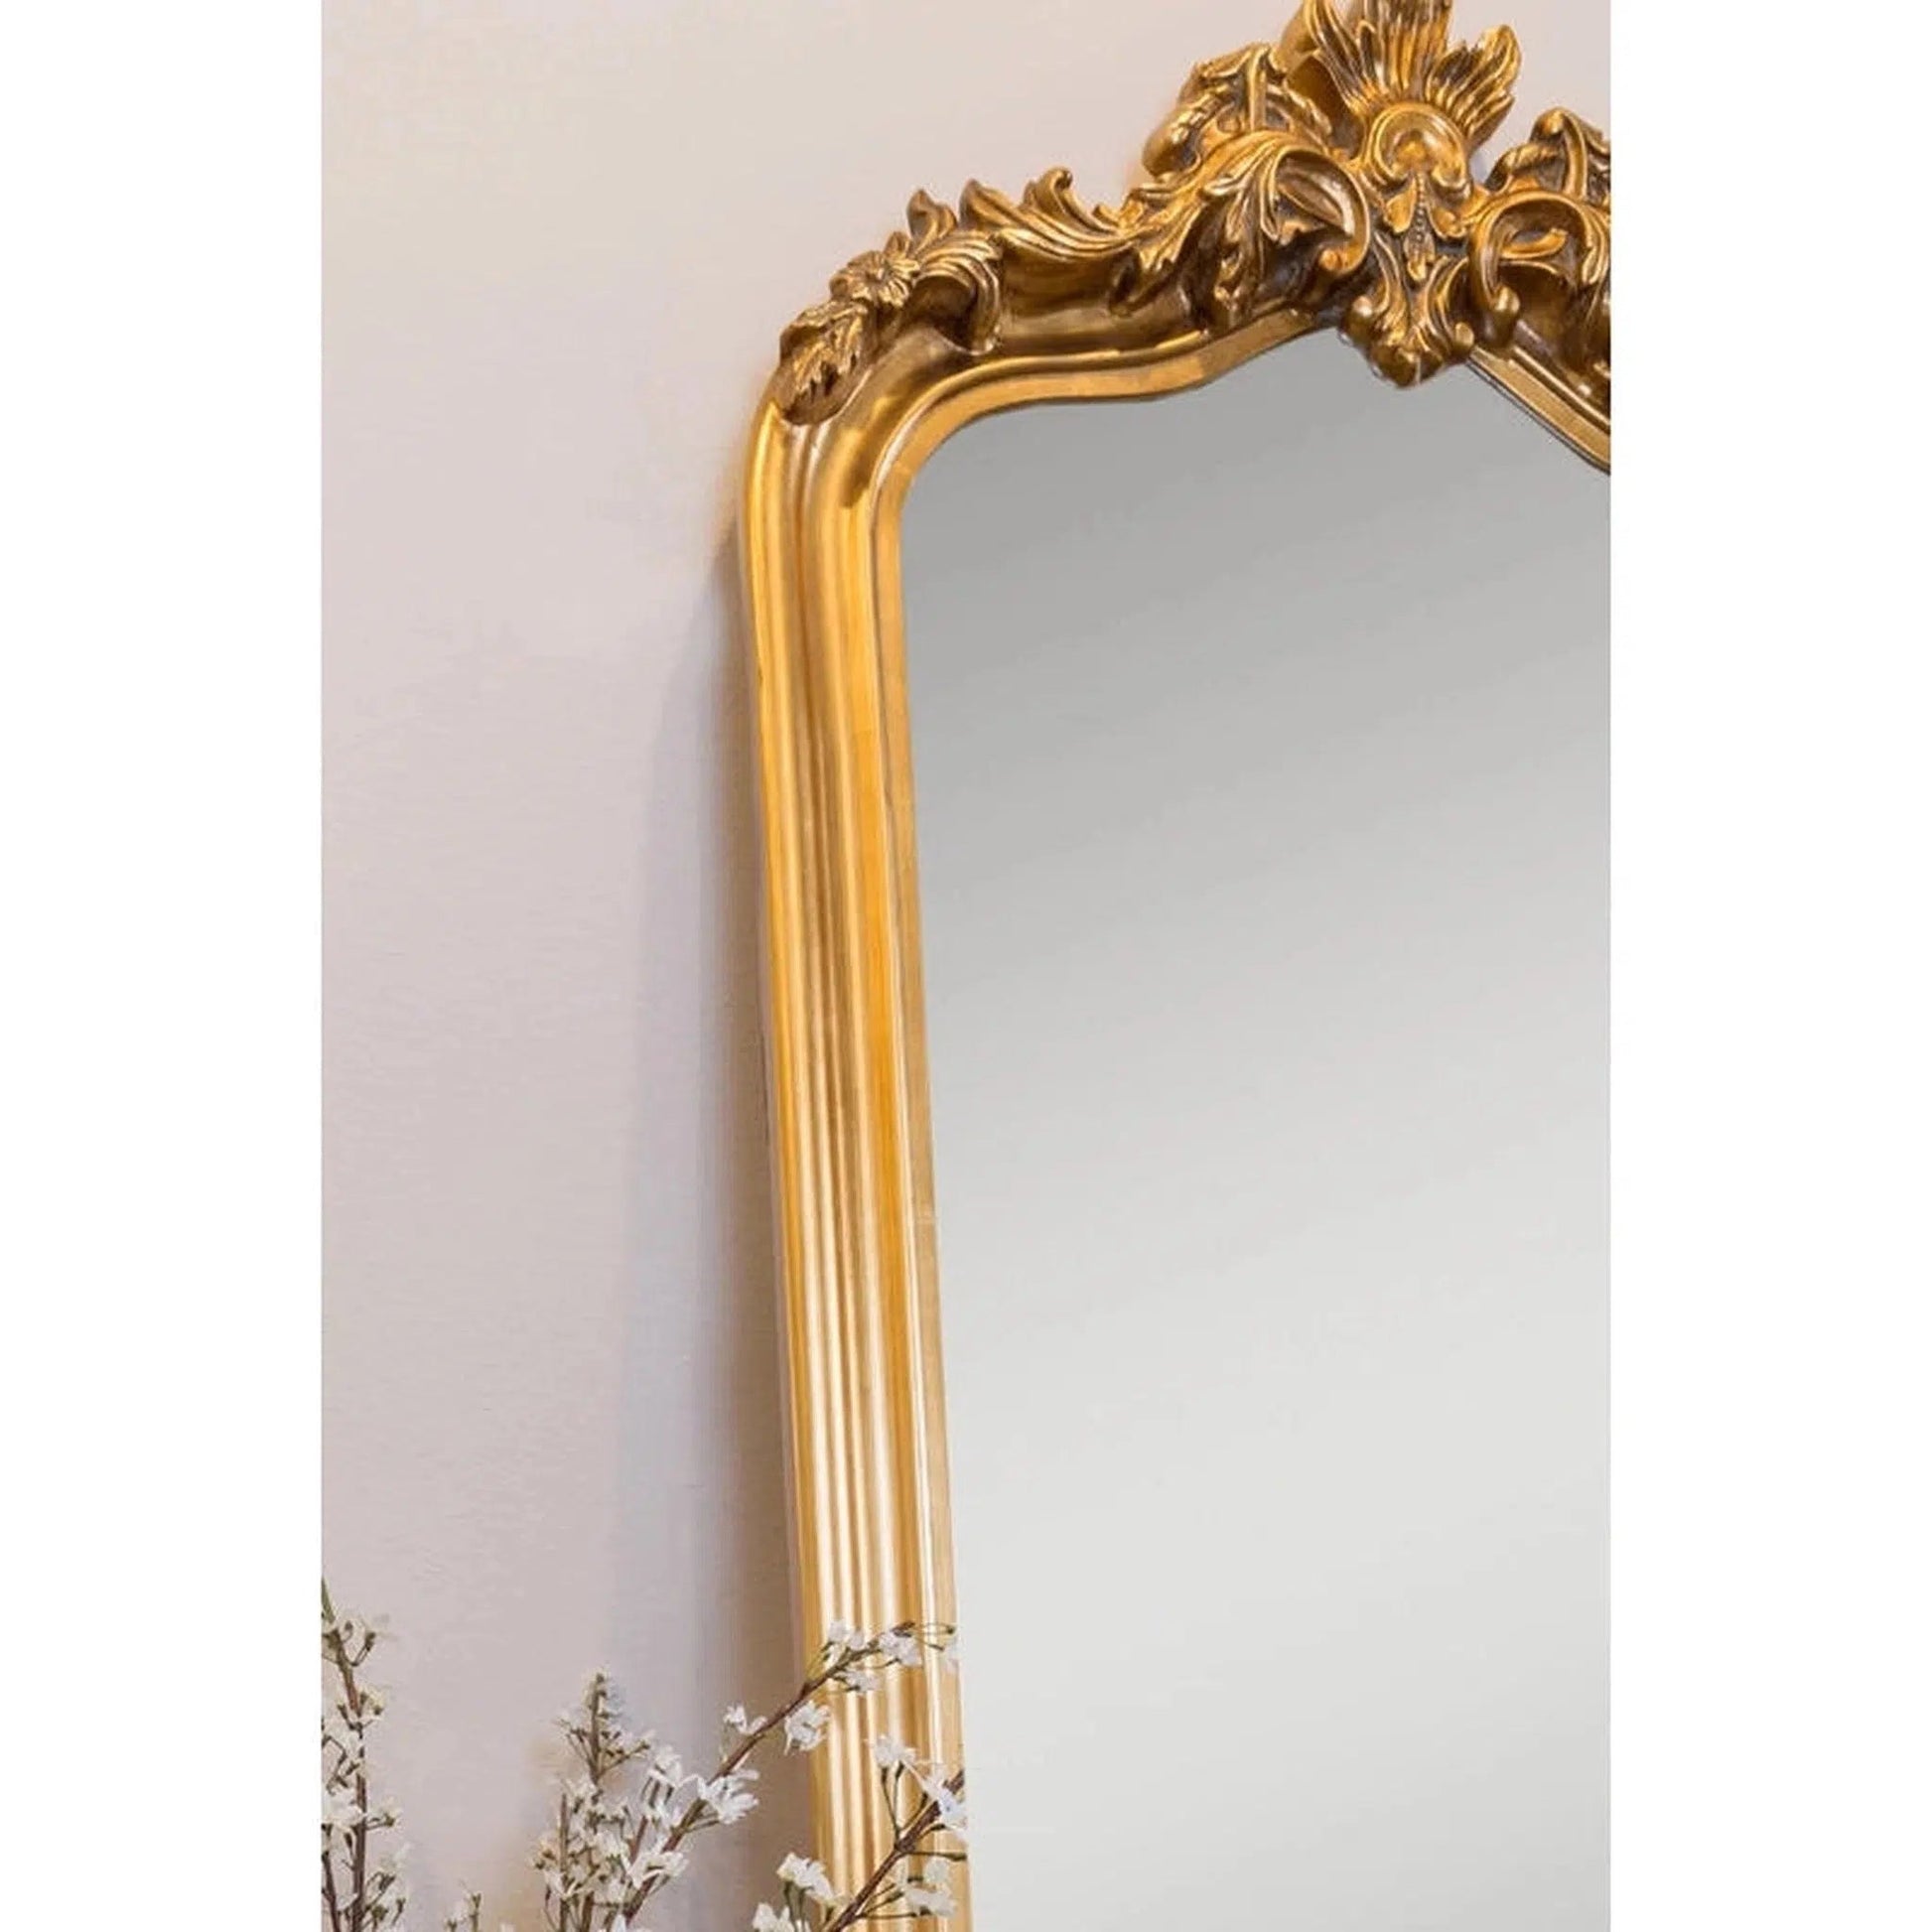 SBC Decor Blenheim 38" x 86" Wall-Mounted Wood Frame Leaner Dresser Mirror In Antique Gold Finish